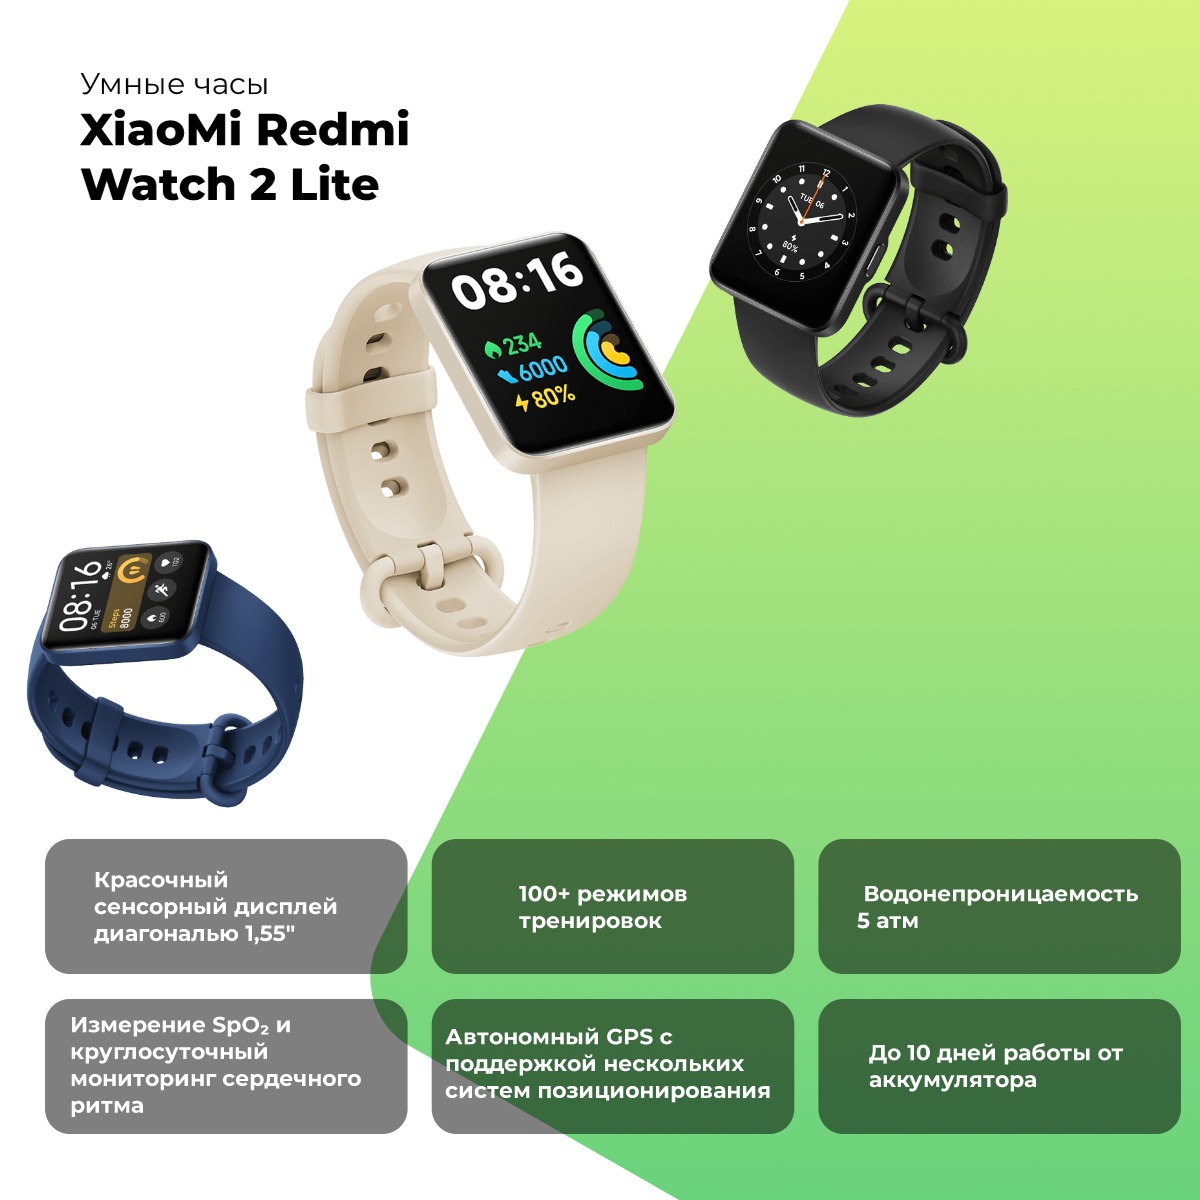 XiaoMi-Redmi-Watch-2-Lite-01